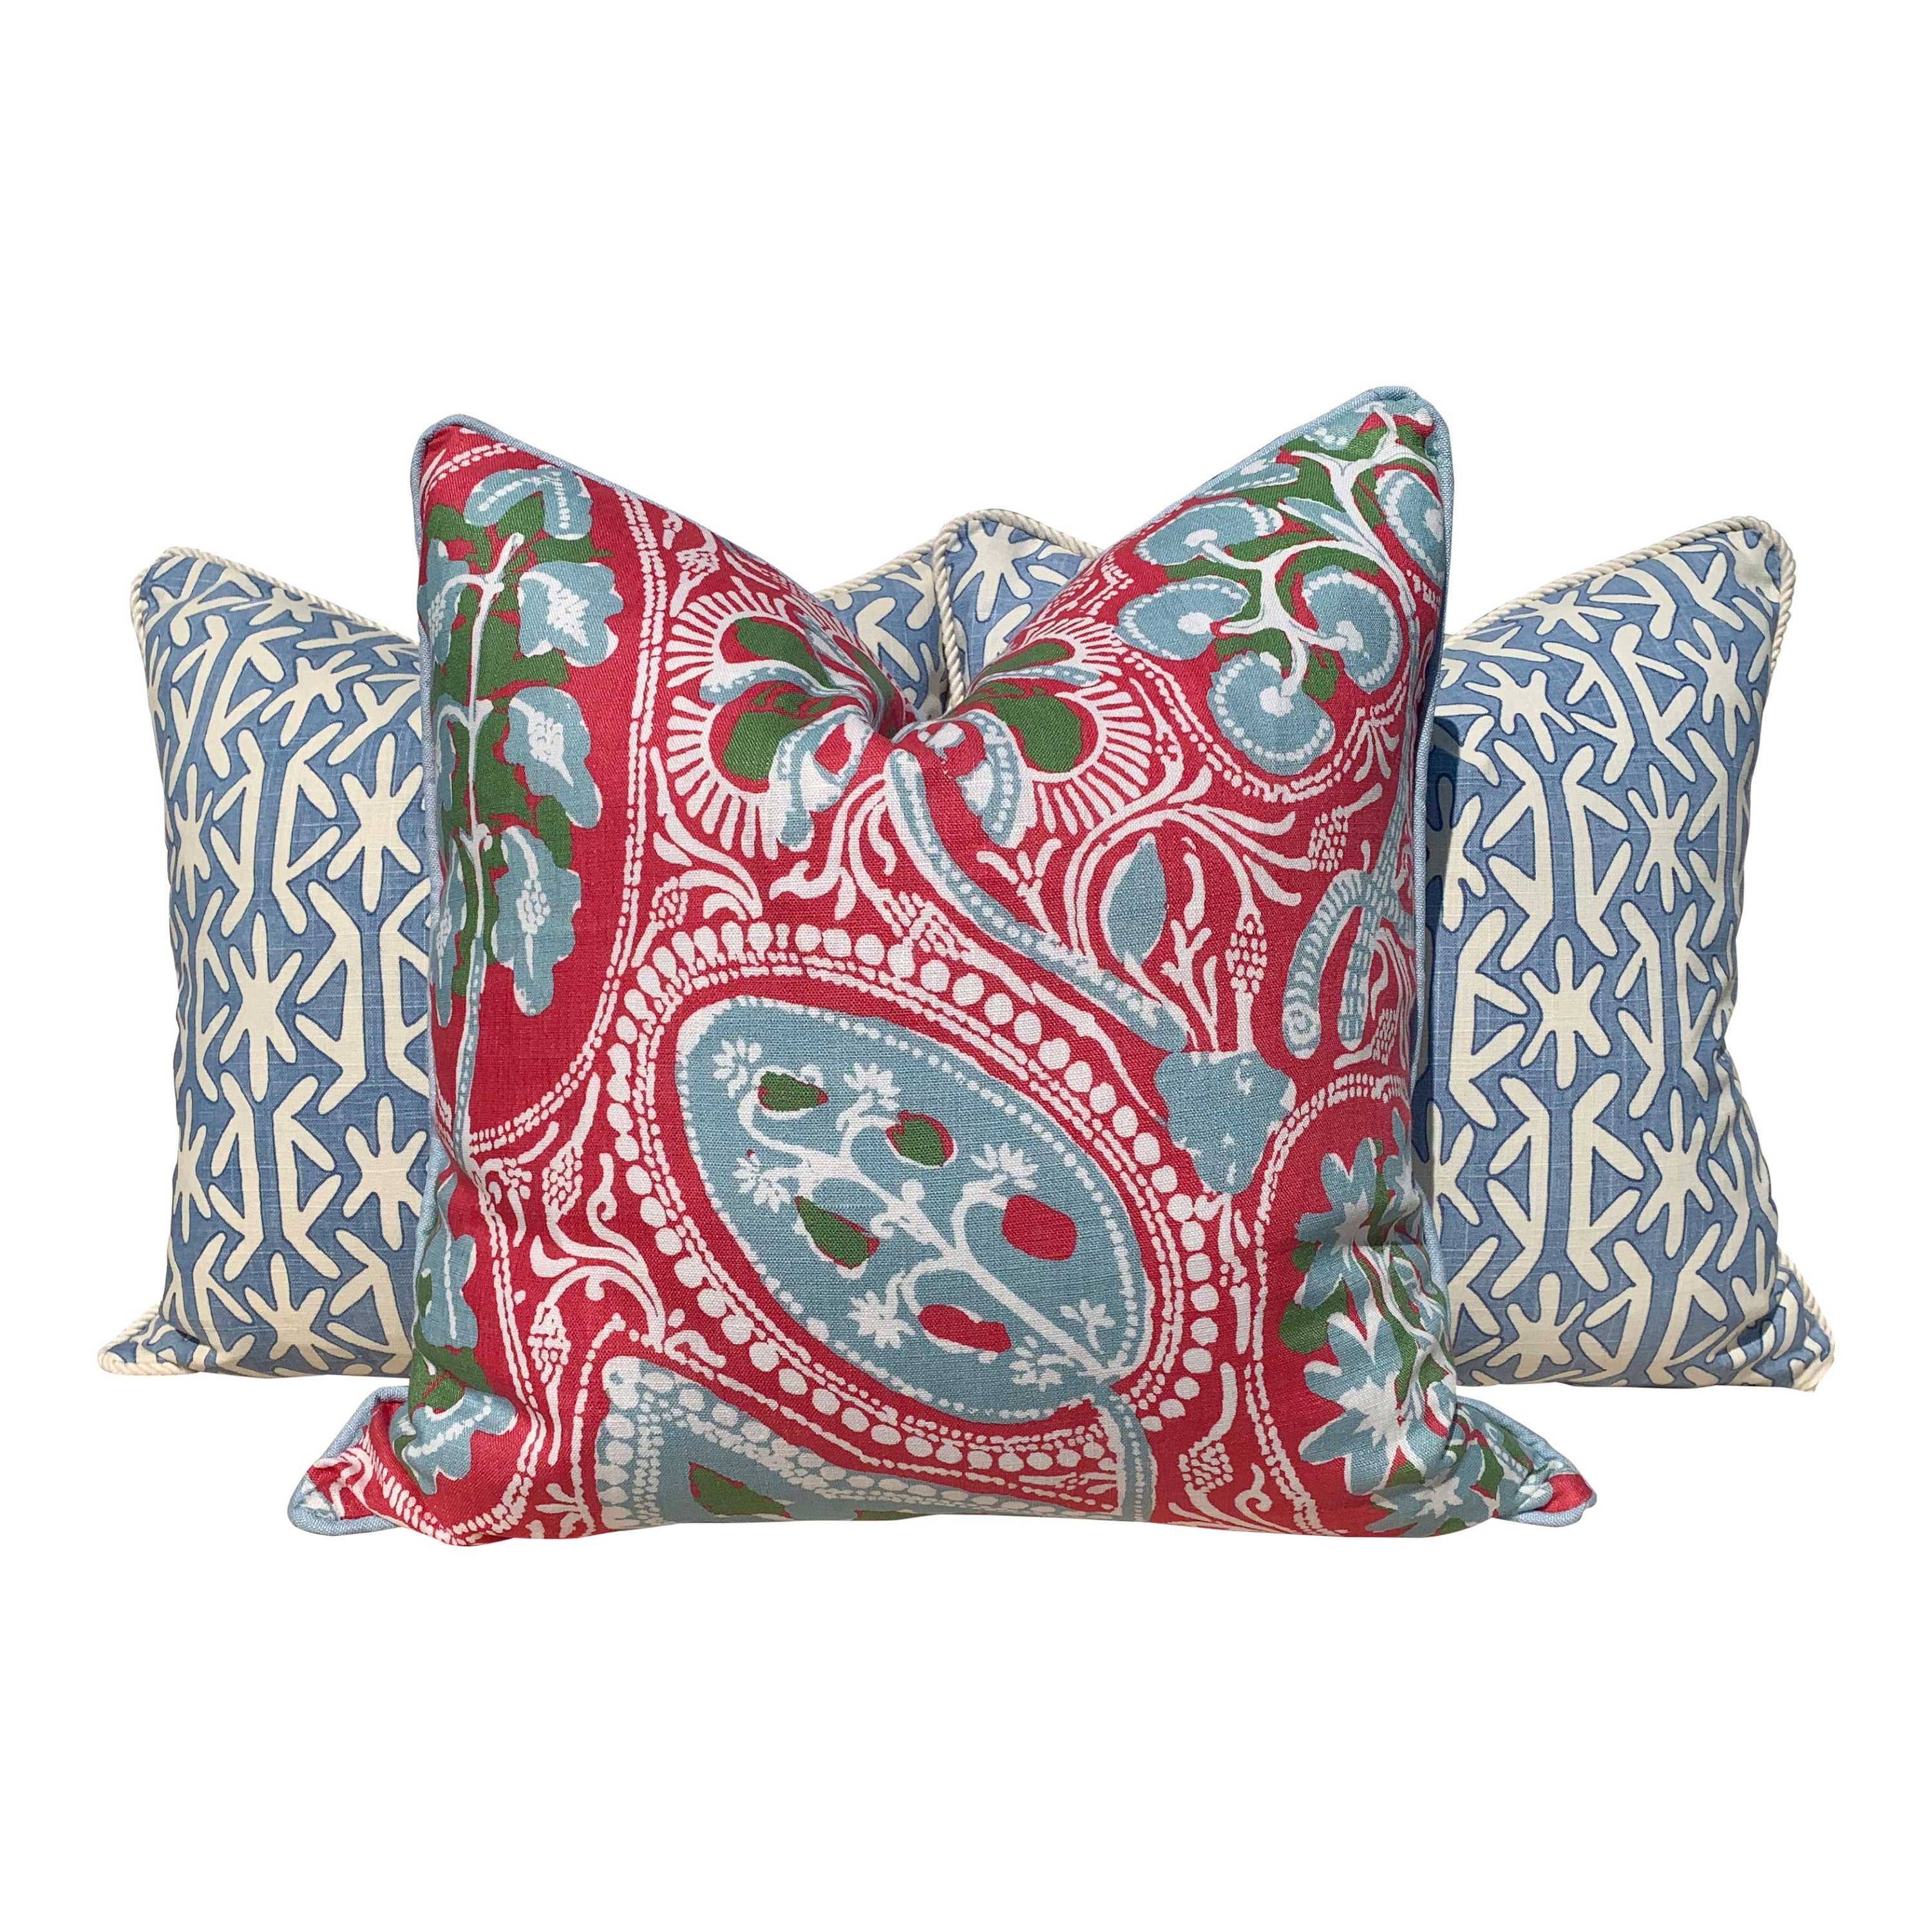 Thibaut Quadrille Pillow, Light Blue Embellished, Cotton Rope Trim.Designer pillows, accent cushion cover, decorative green pillow